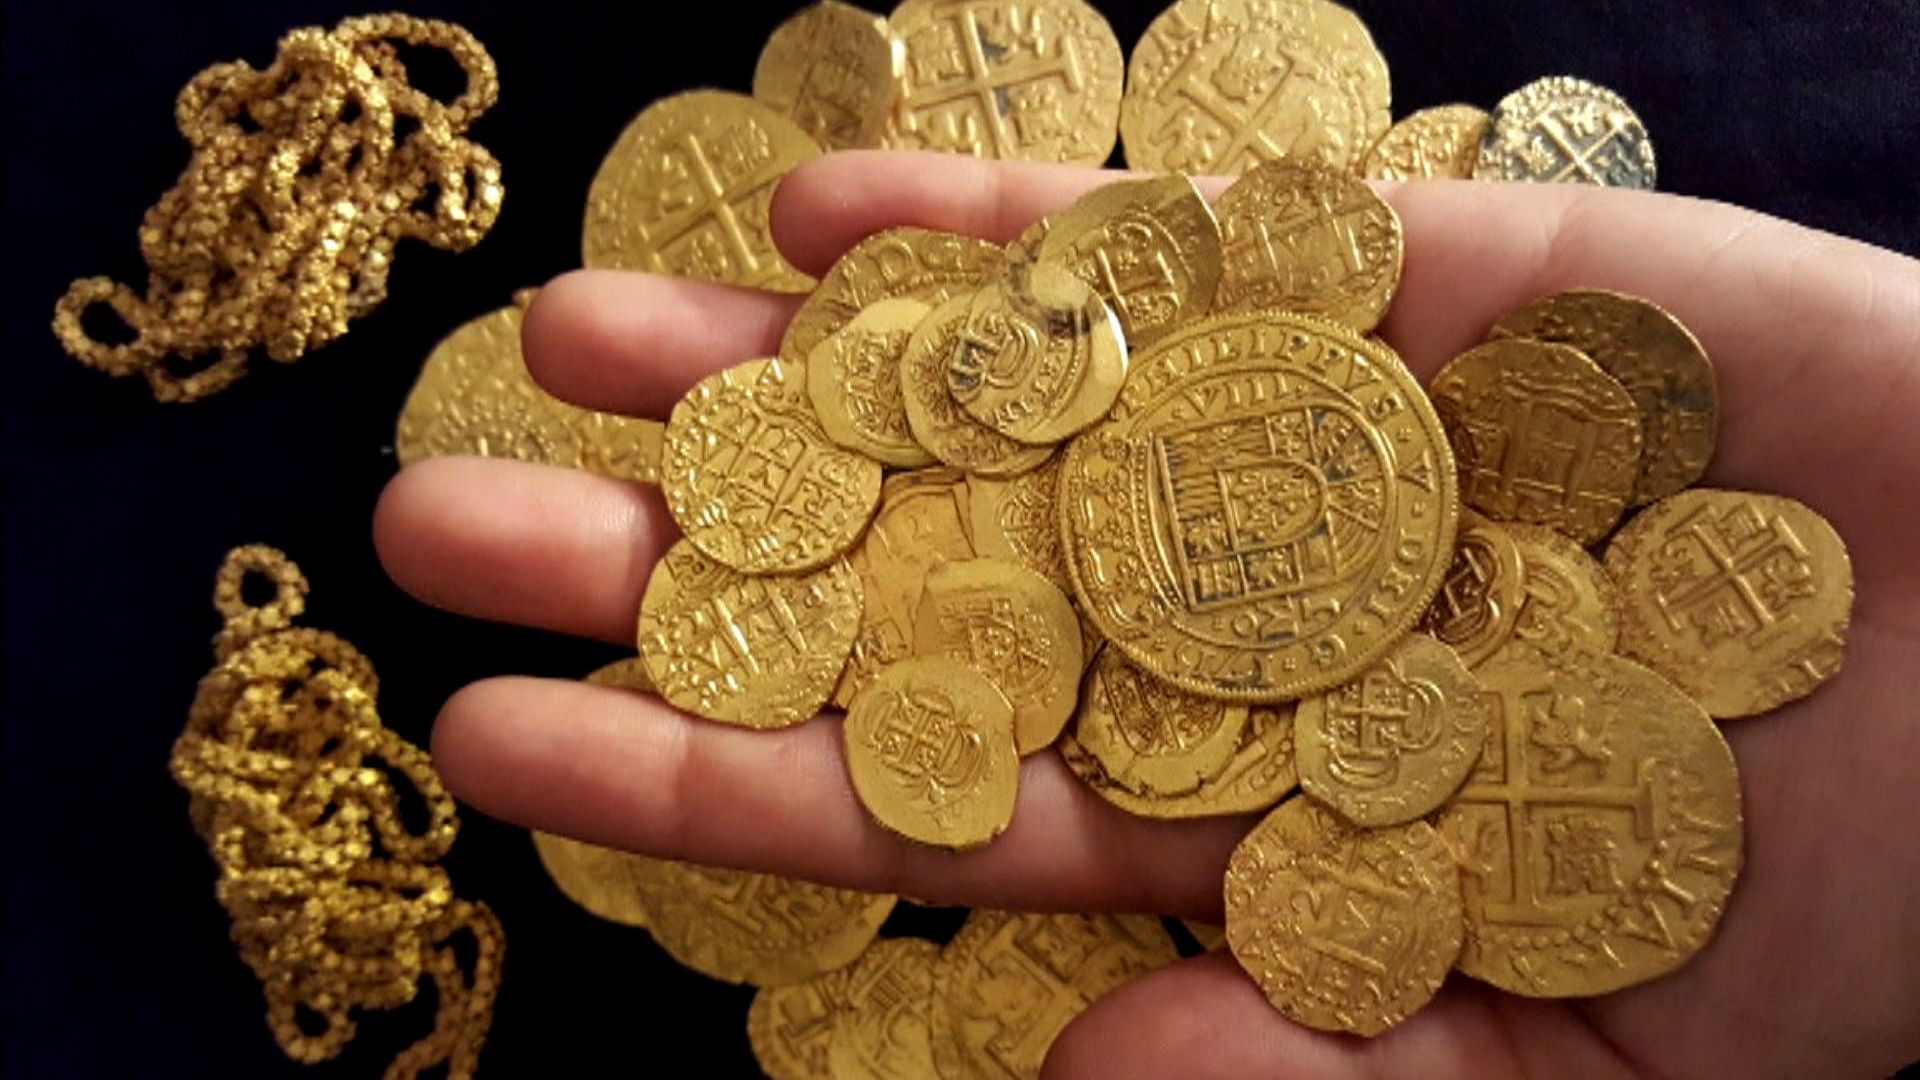 Золото в древности. Монеты золото 17век Голландии. Золотые монеты 17 века. Золотые монеты Европы 17 века. Золотые монеты Испании 17 века.